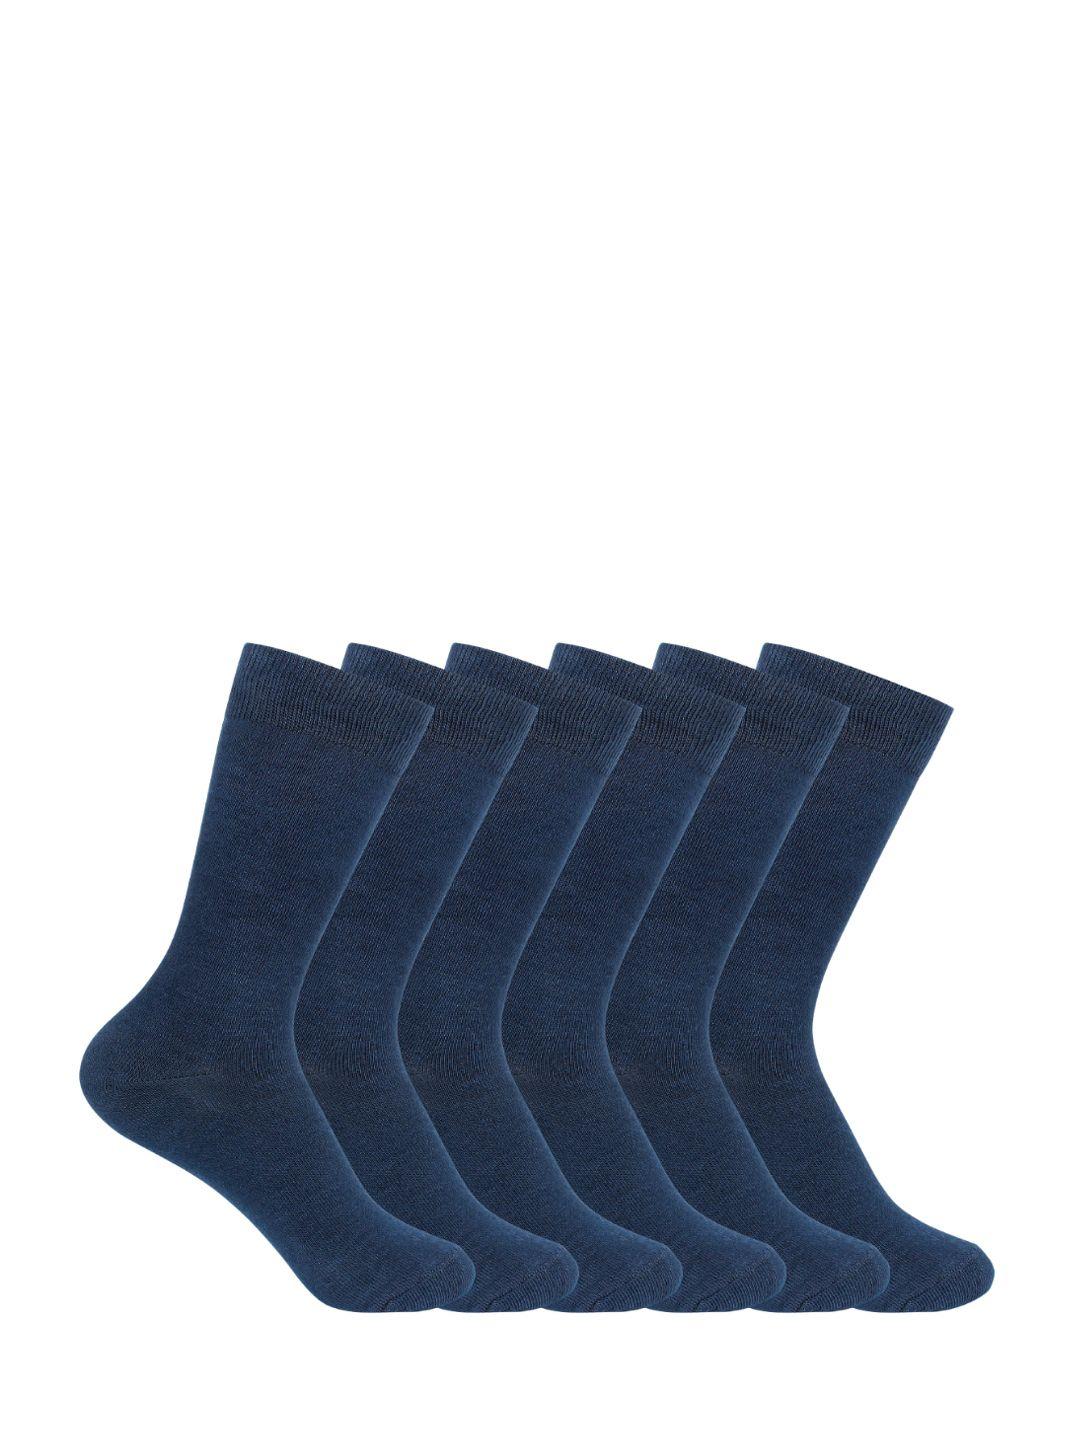 supersox unisex kids pack of 6 navy blue solid calf-length school uniform socks